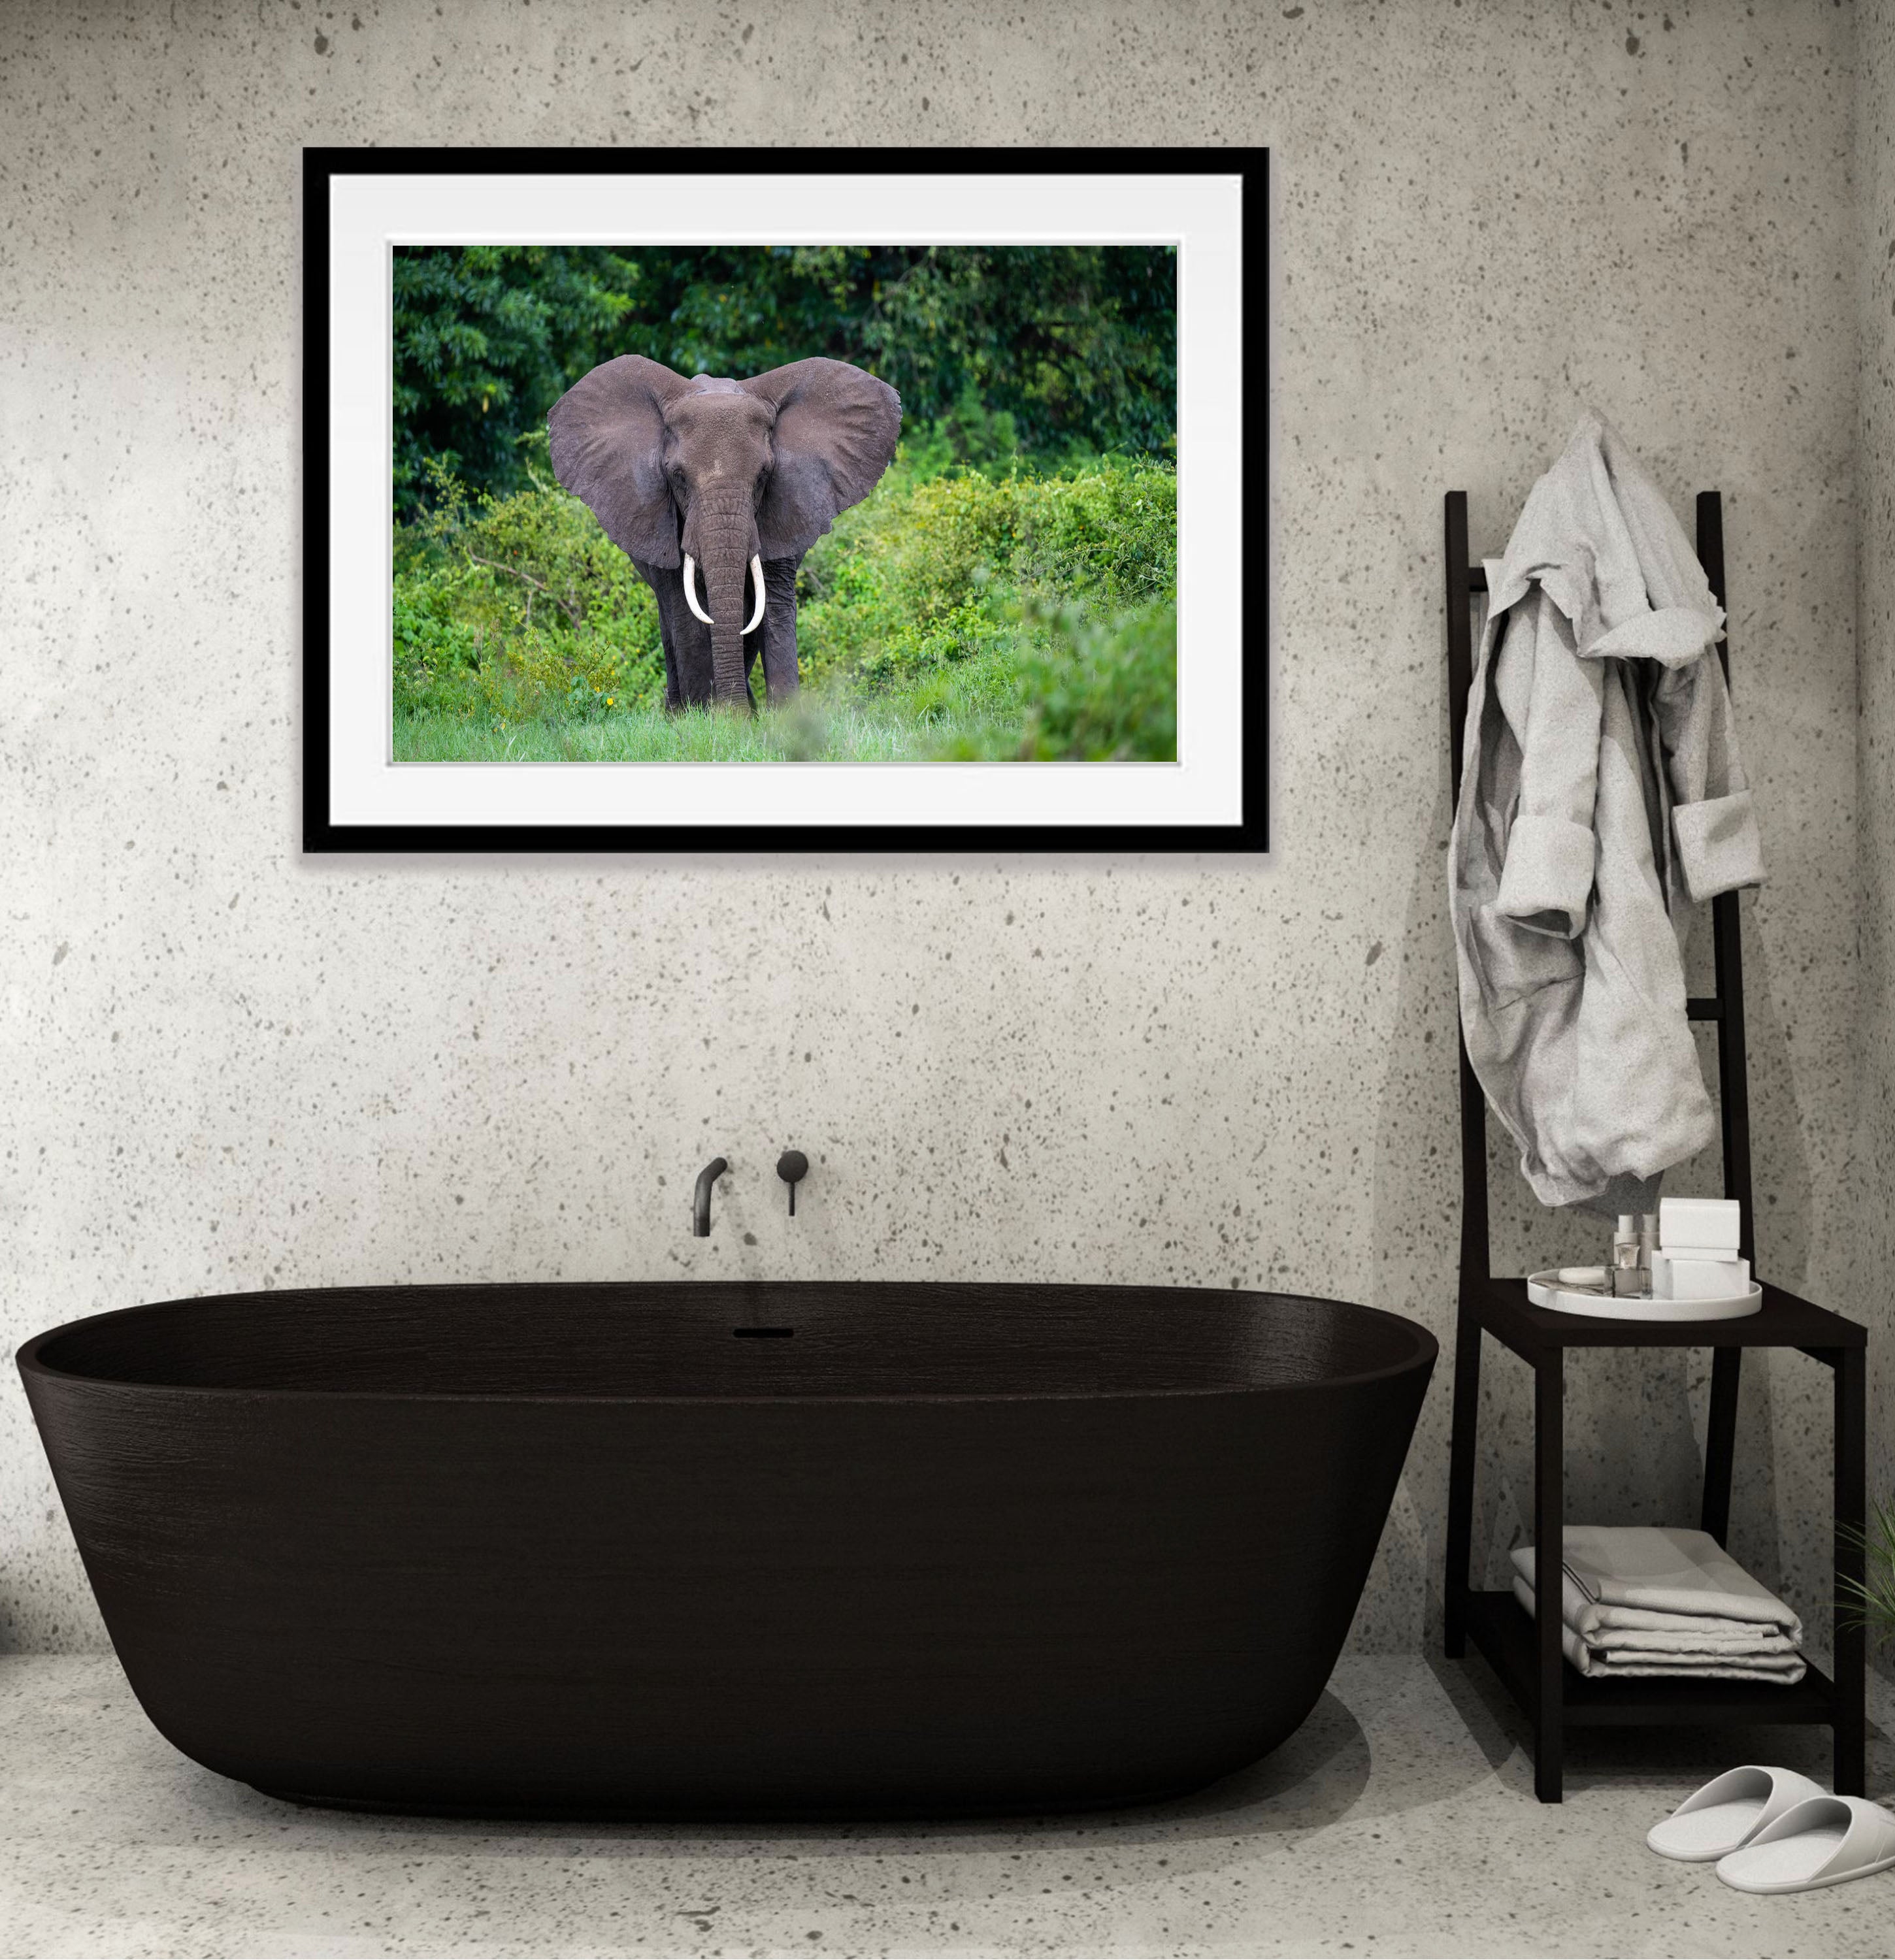 Elephant in the jungle, Ngorongoro Crater, Tanzania